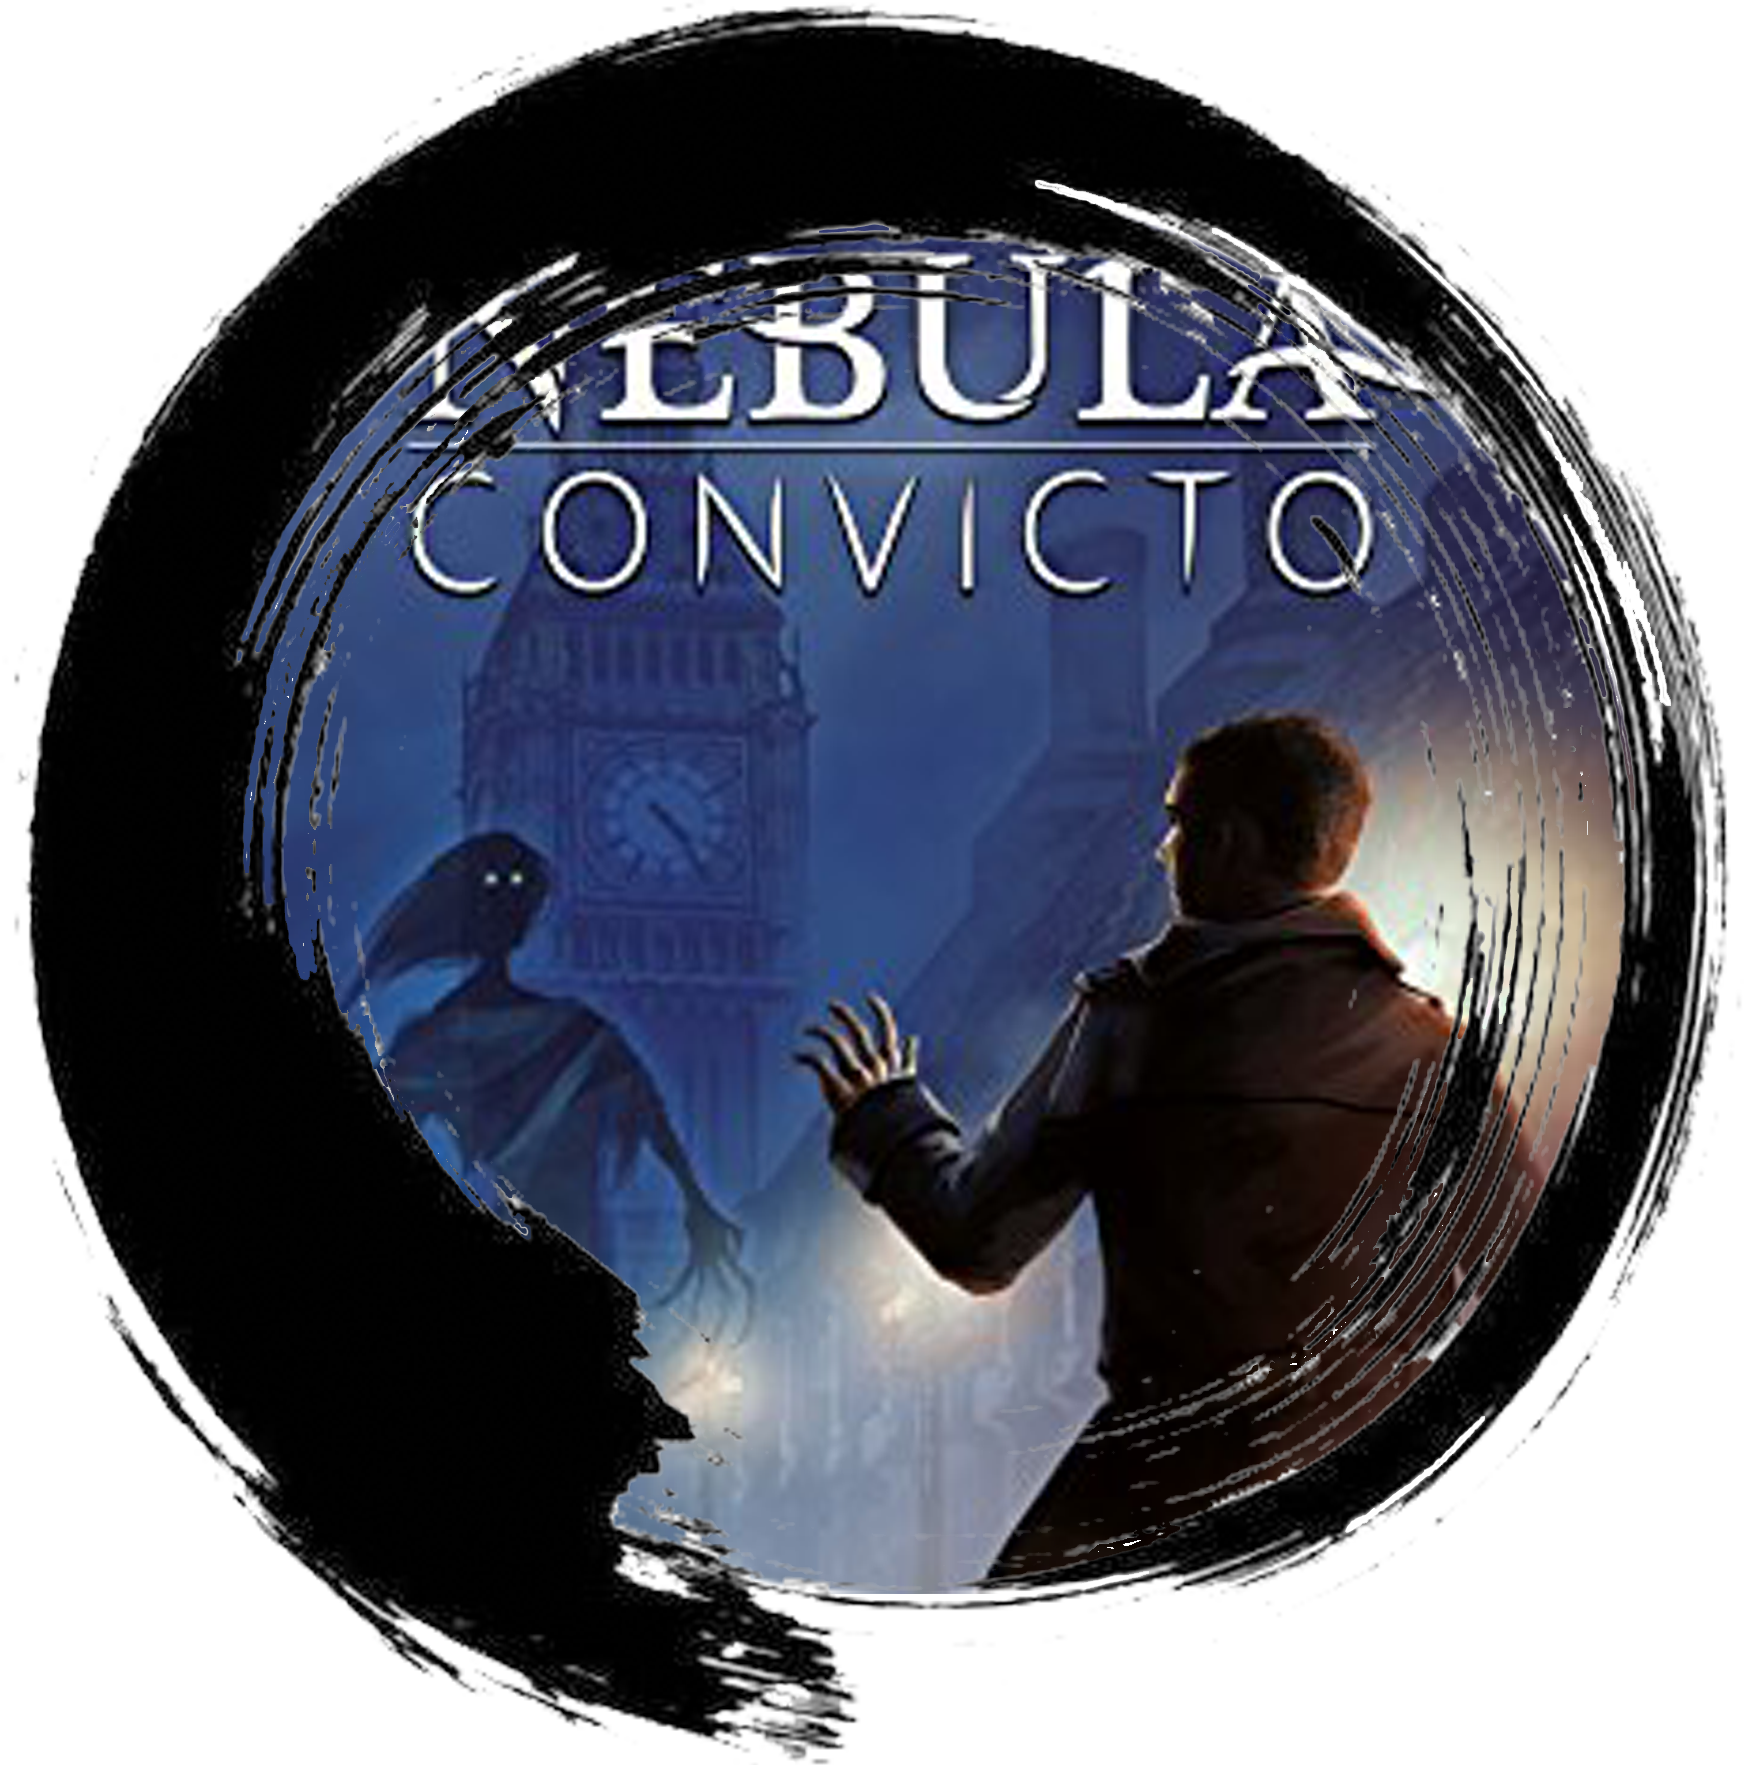 Nebula Convicto #1